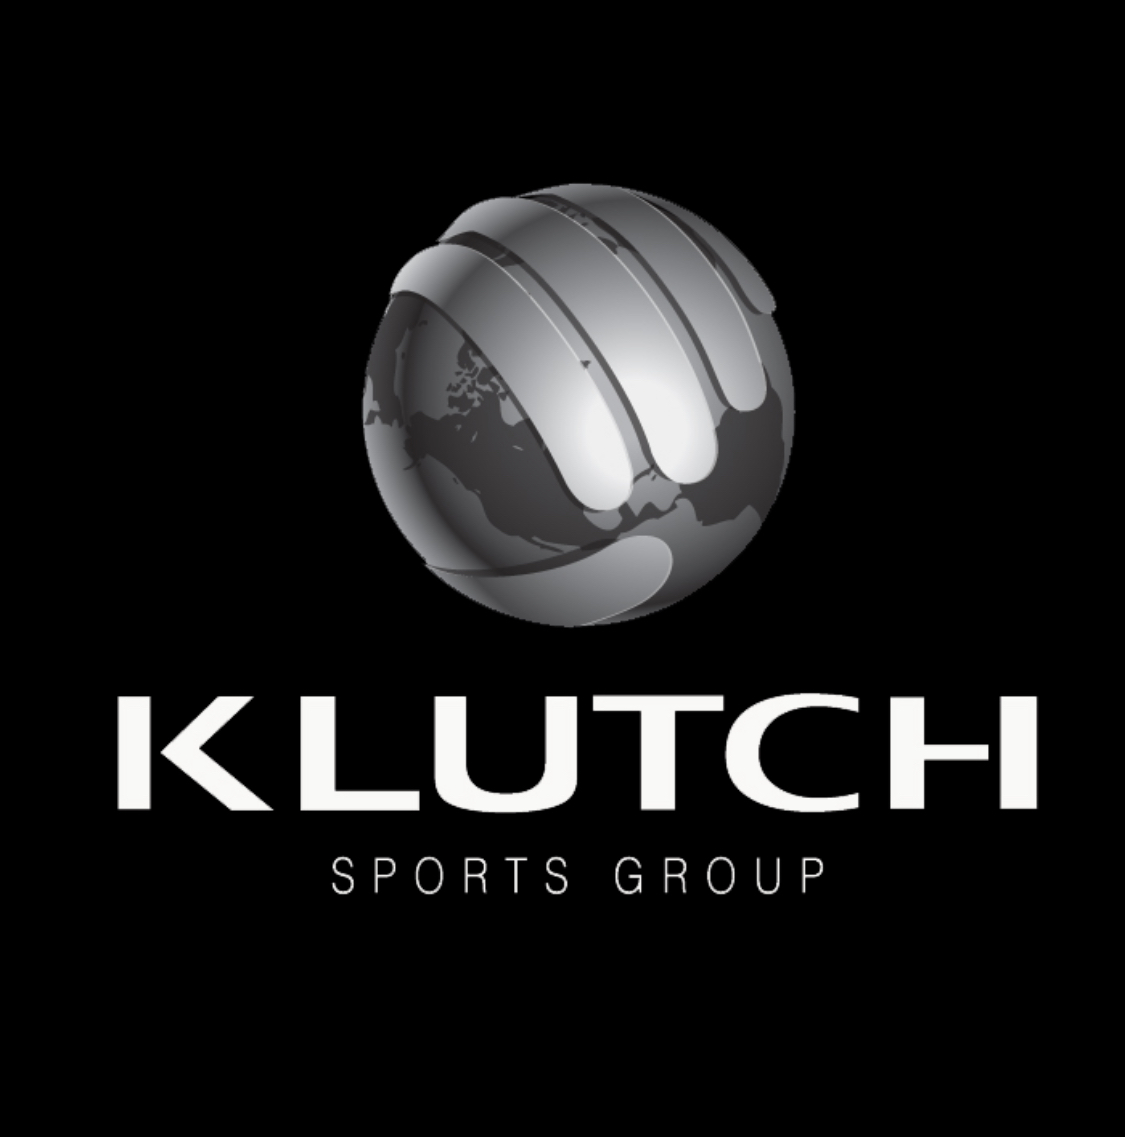 klutch sports group